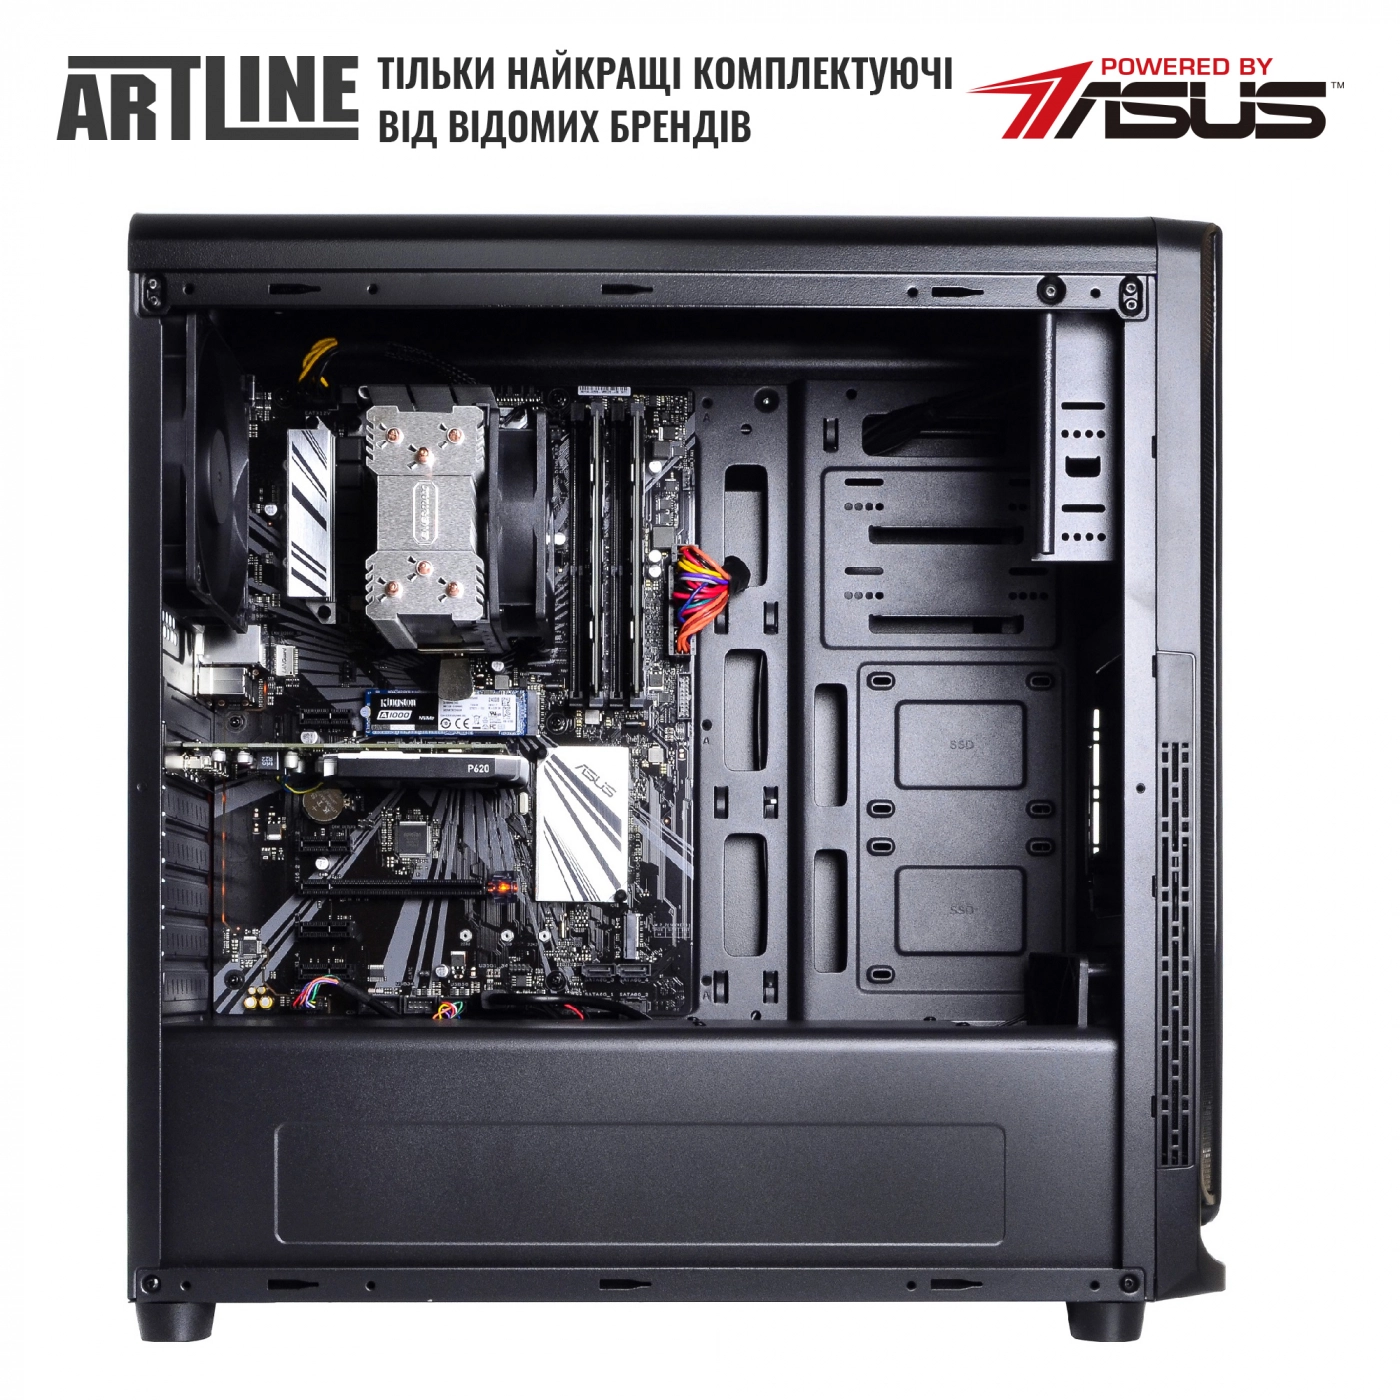 Купити Сервер ARTLINE Business T19v20 - фото 5